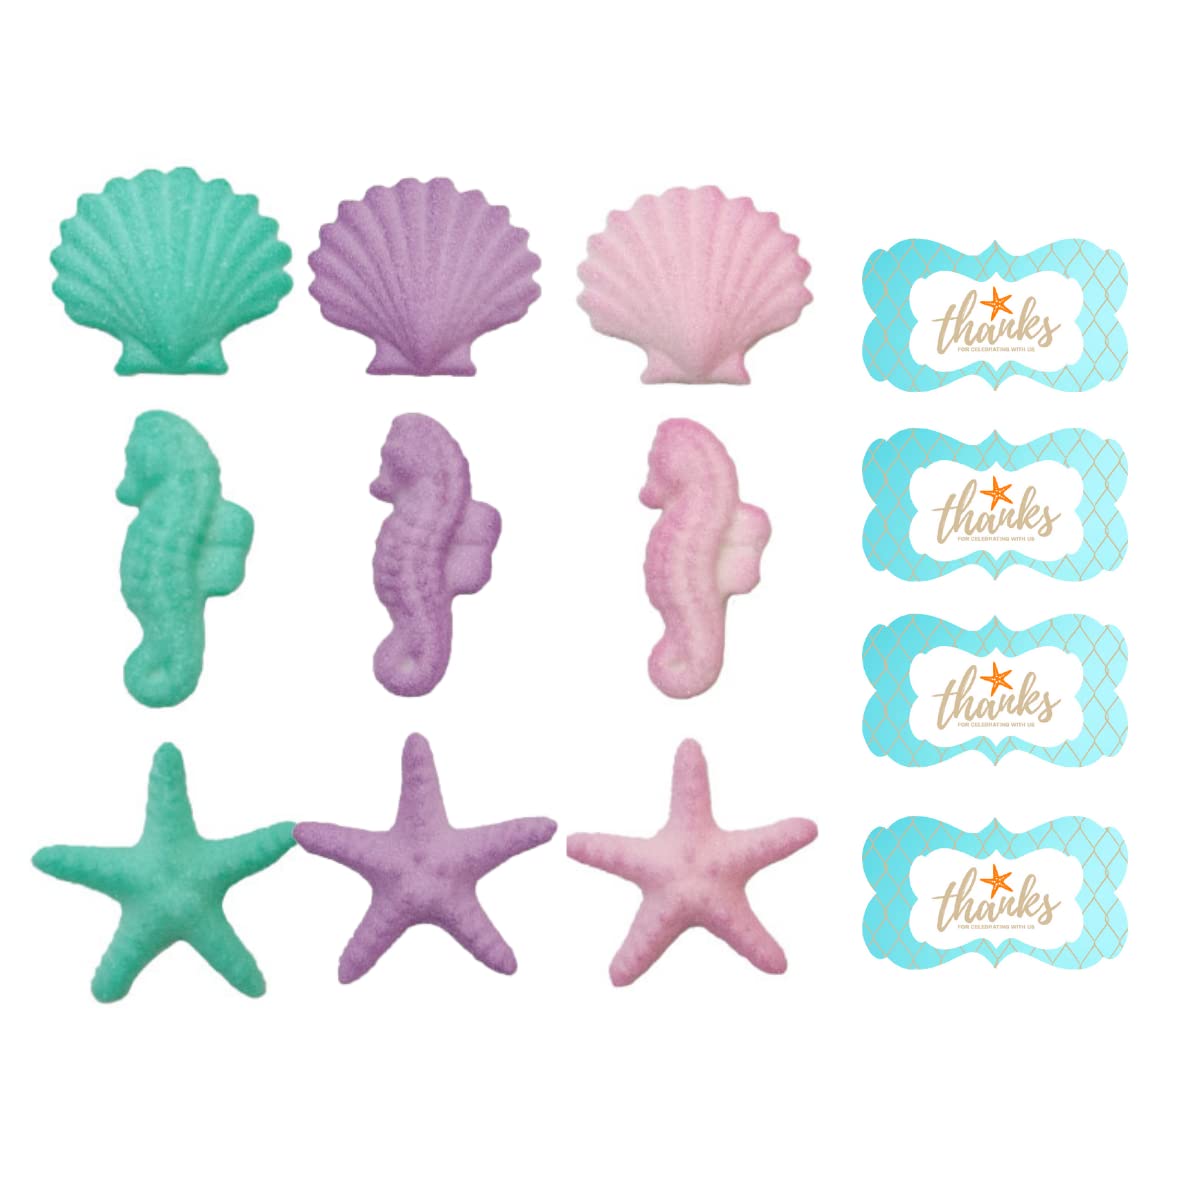 CakeSupplyShop Sugar Sea Animals Mermaid Cake Decorations, 12-Pack